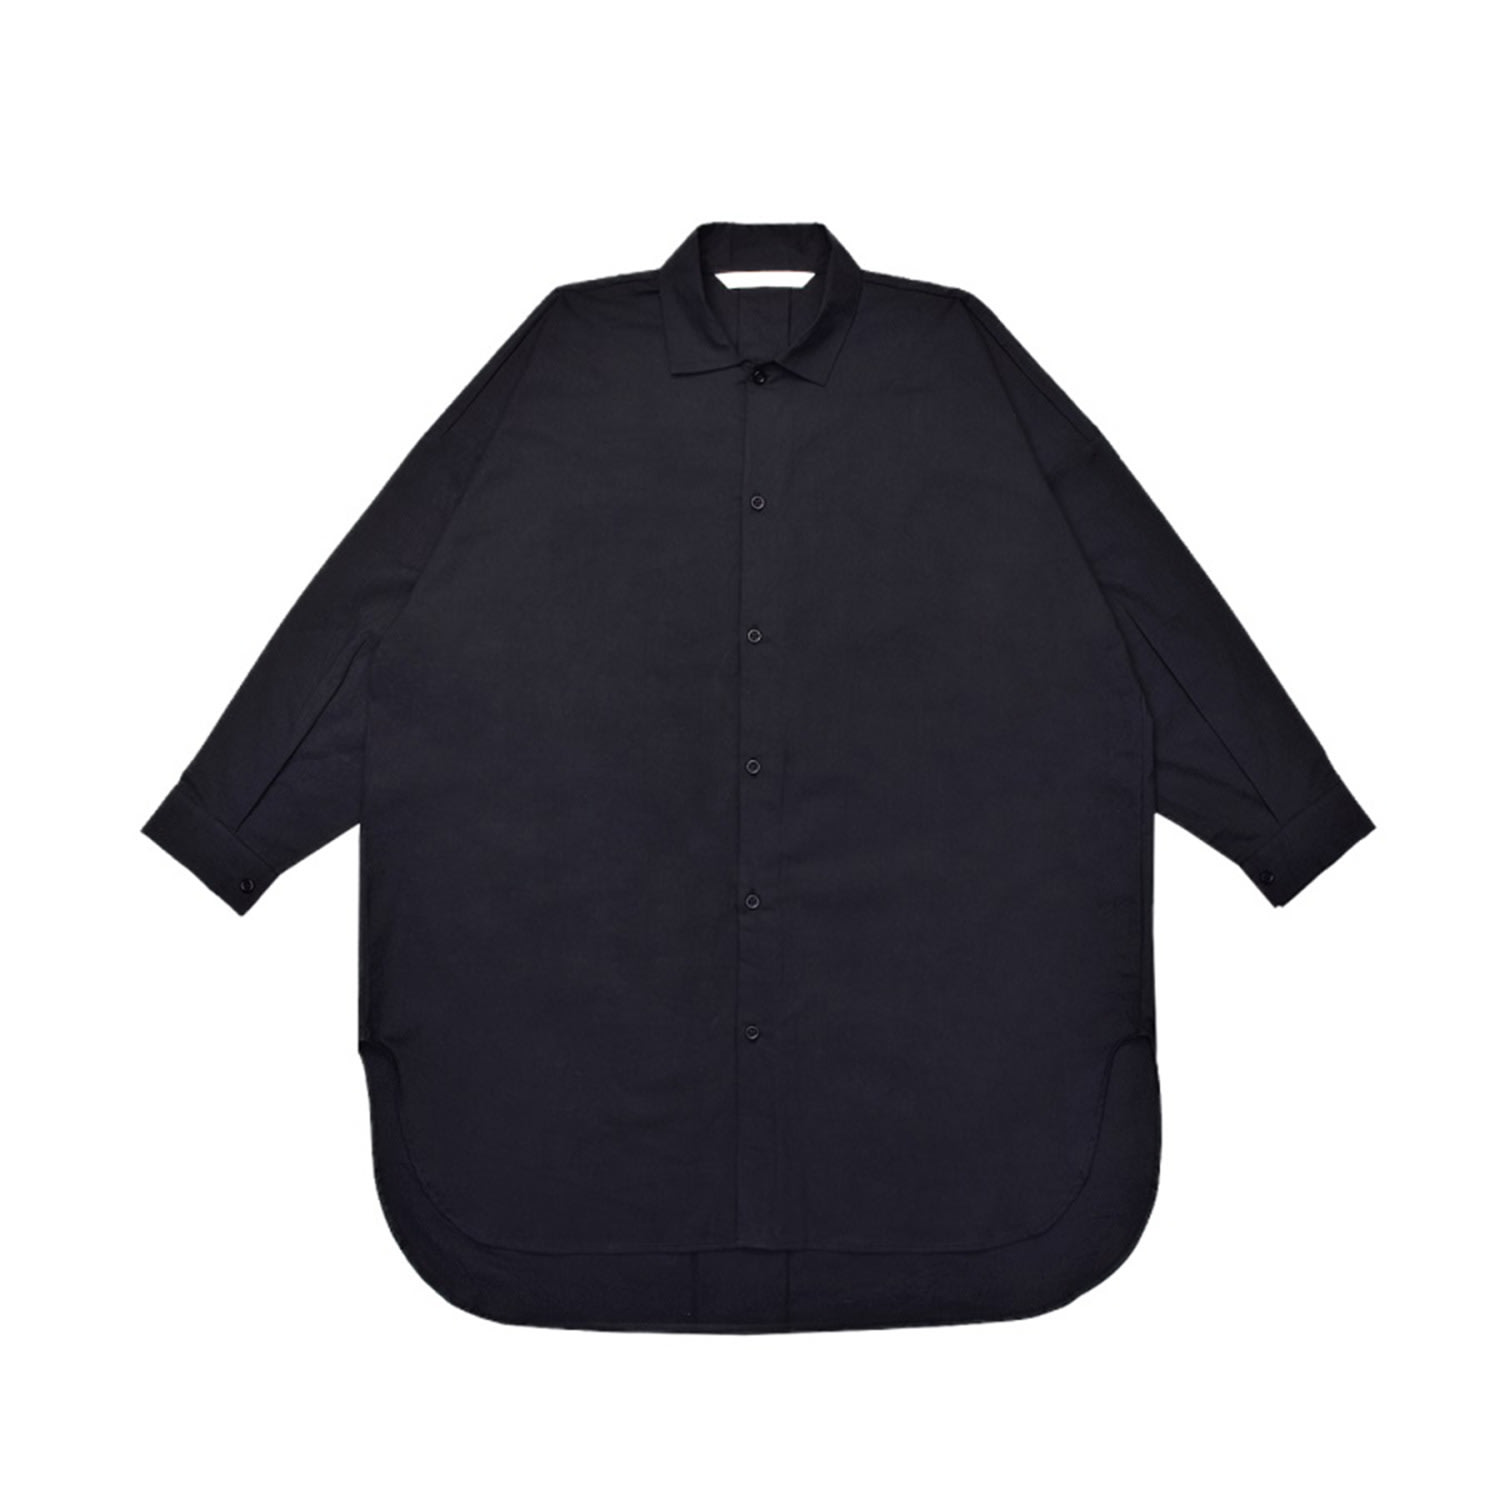 Cs01 Men's Long Shirt - Black Small LaneFortyfive